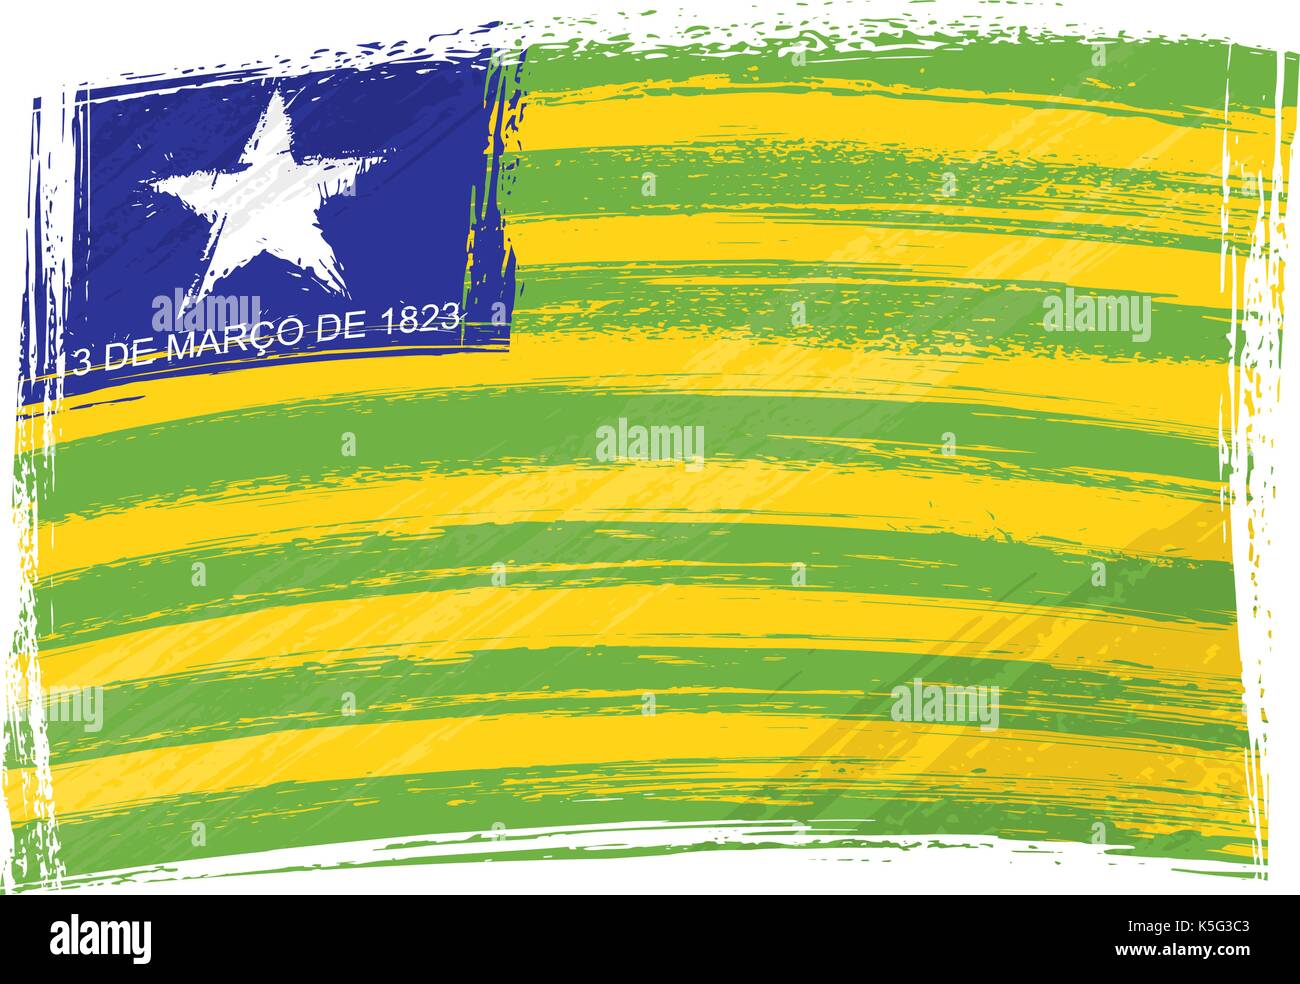 Grunge Piaui flag Stock Vector